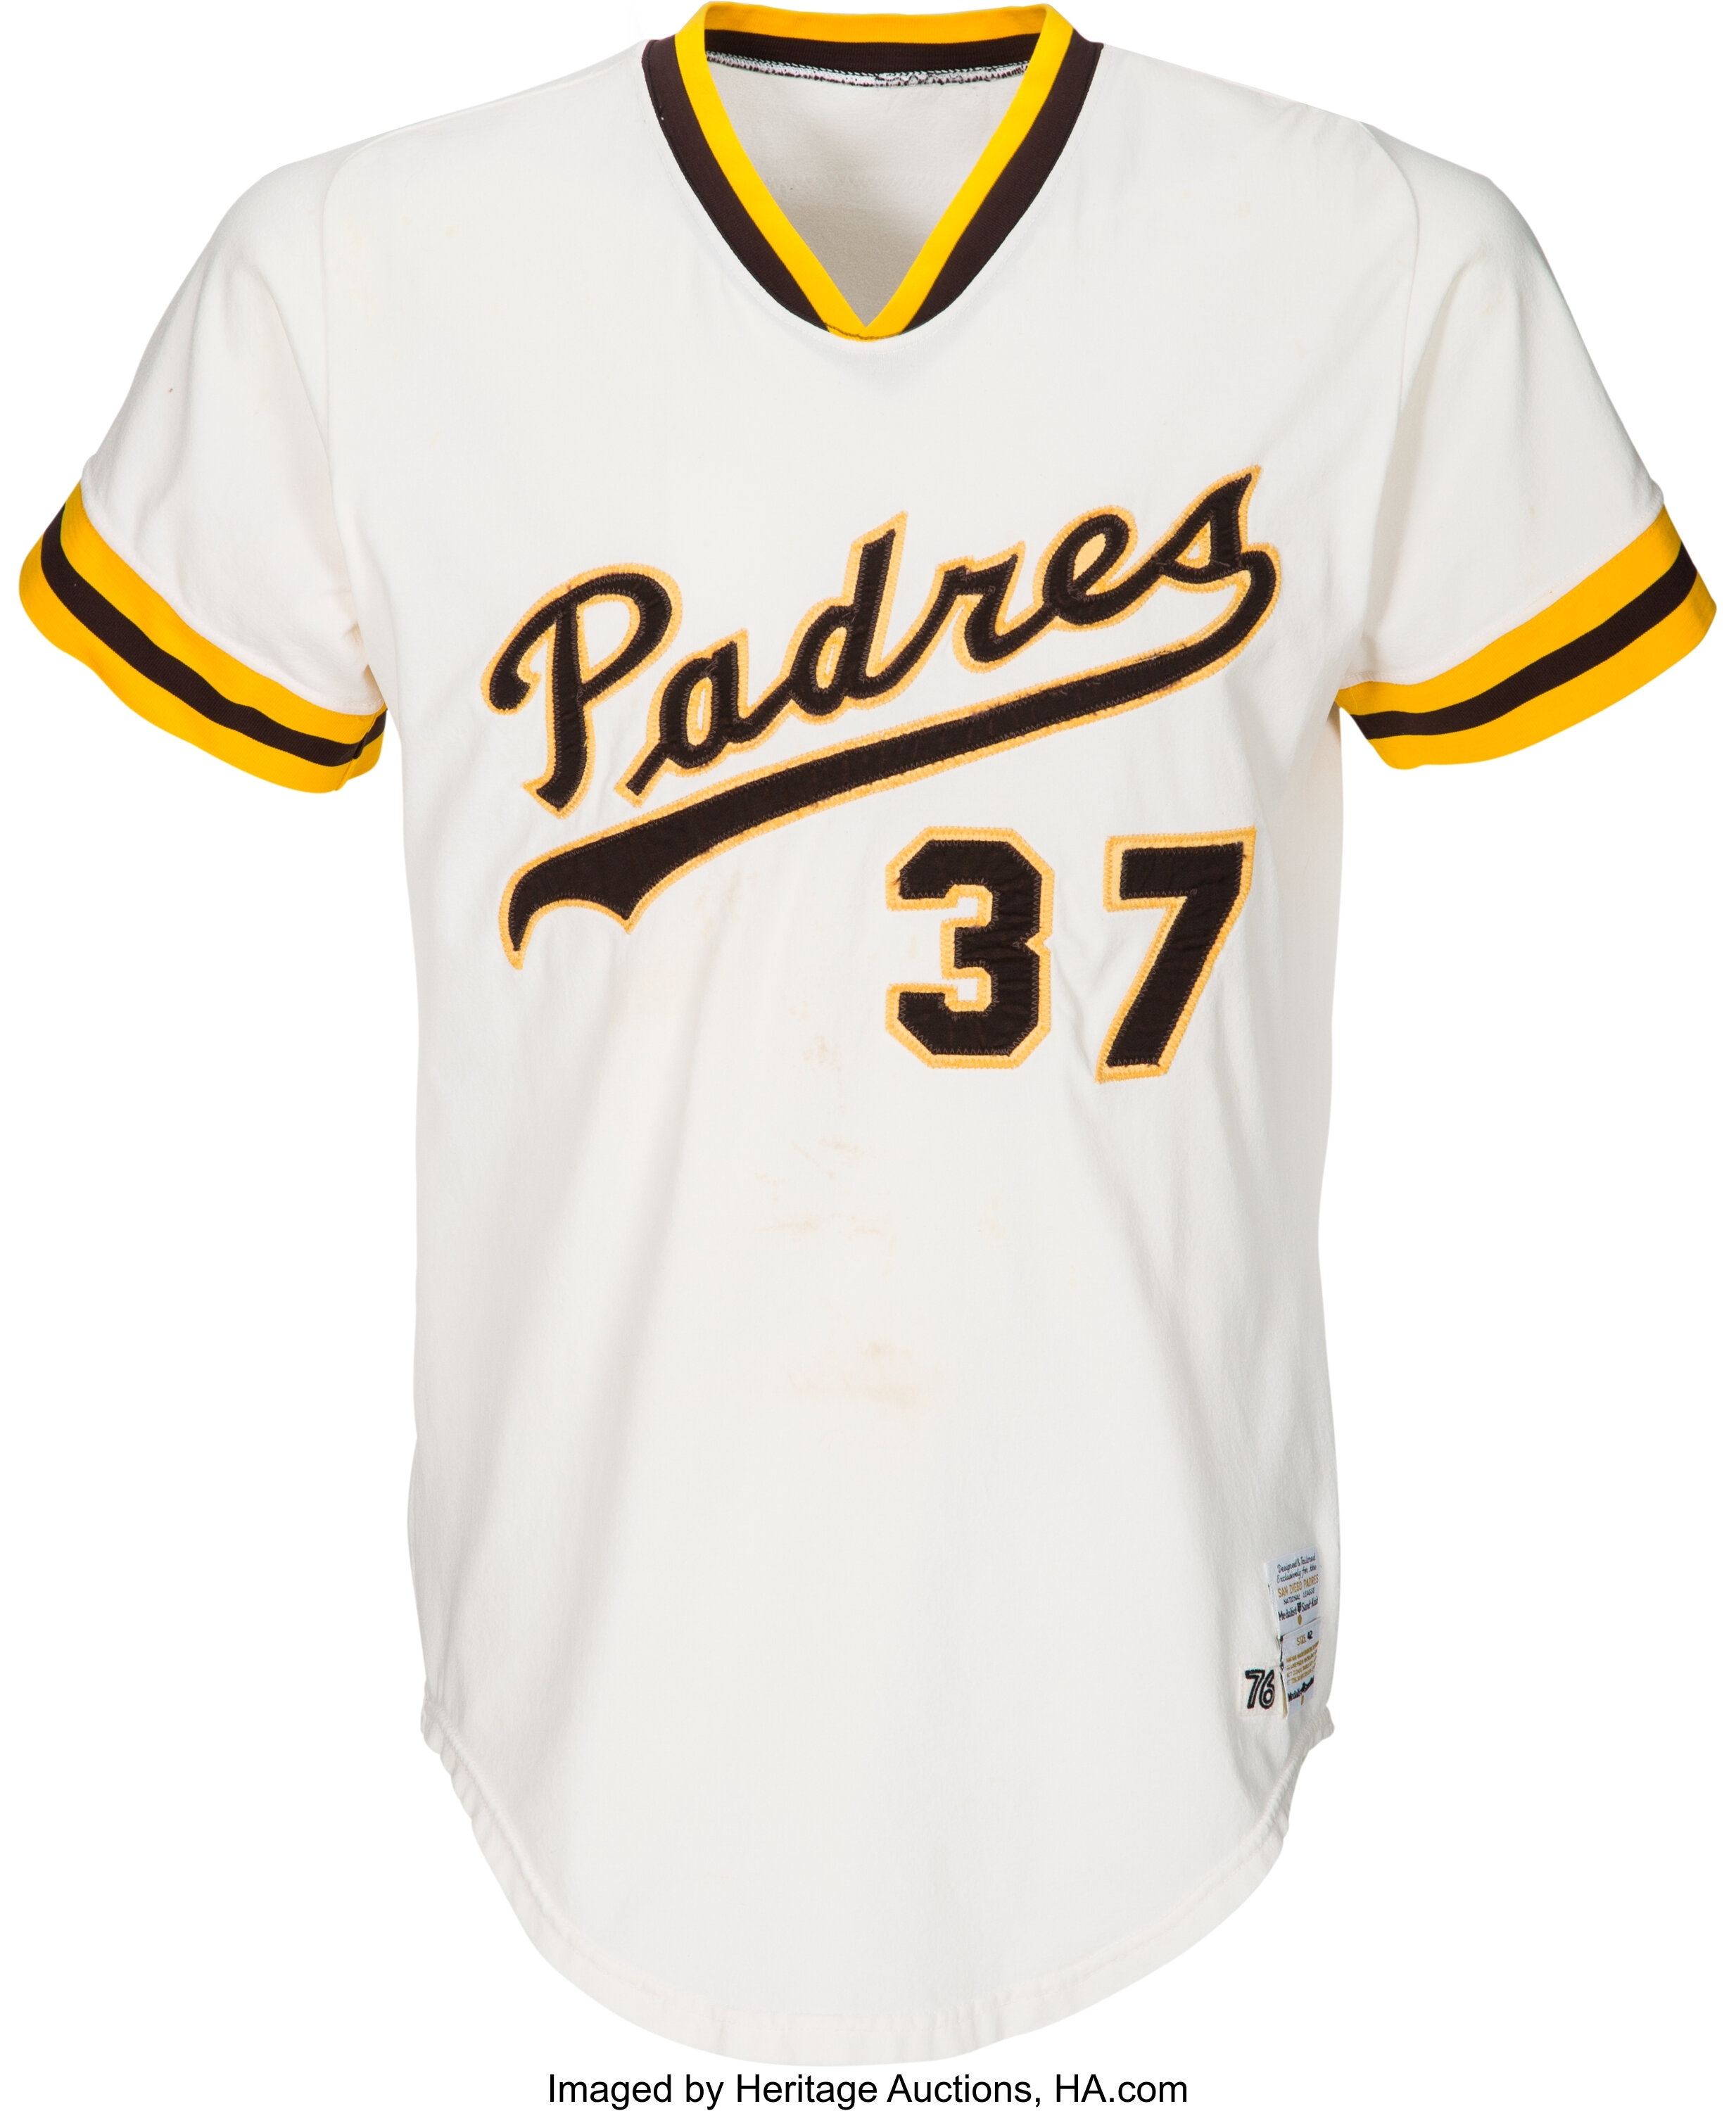 Vintage San Diego Padres Jersey - Sports & Outdoors - Wichita